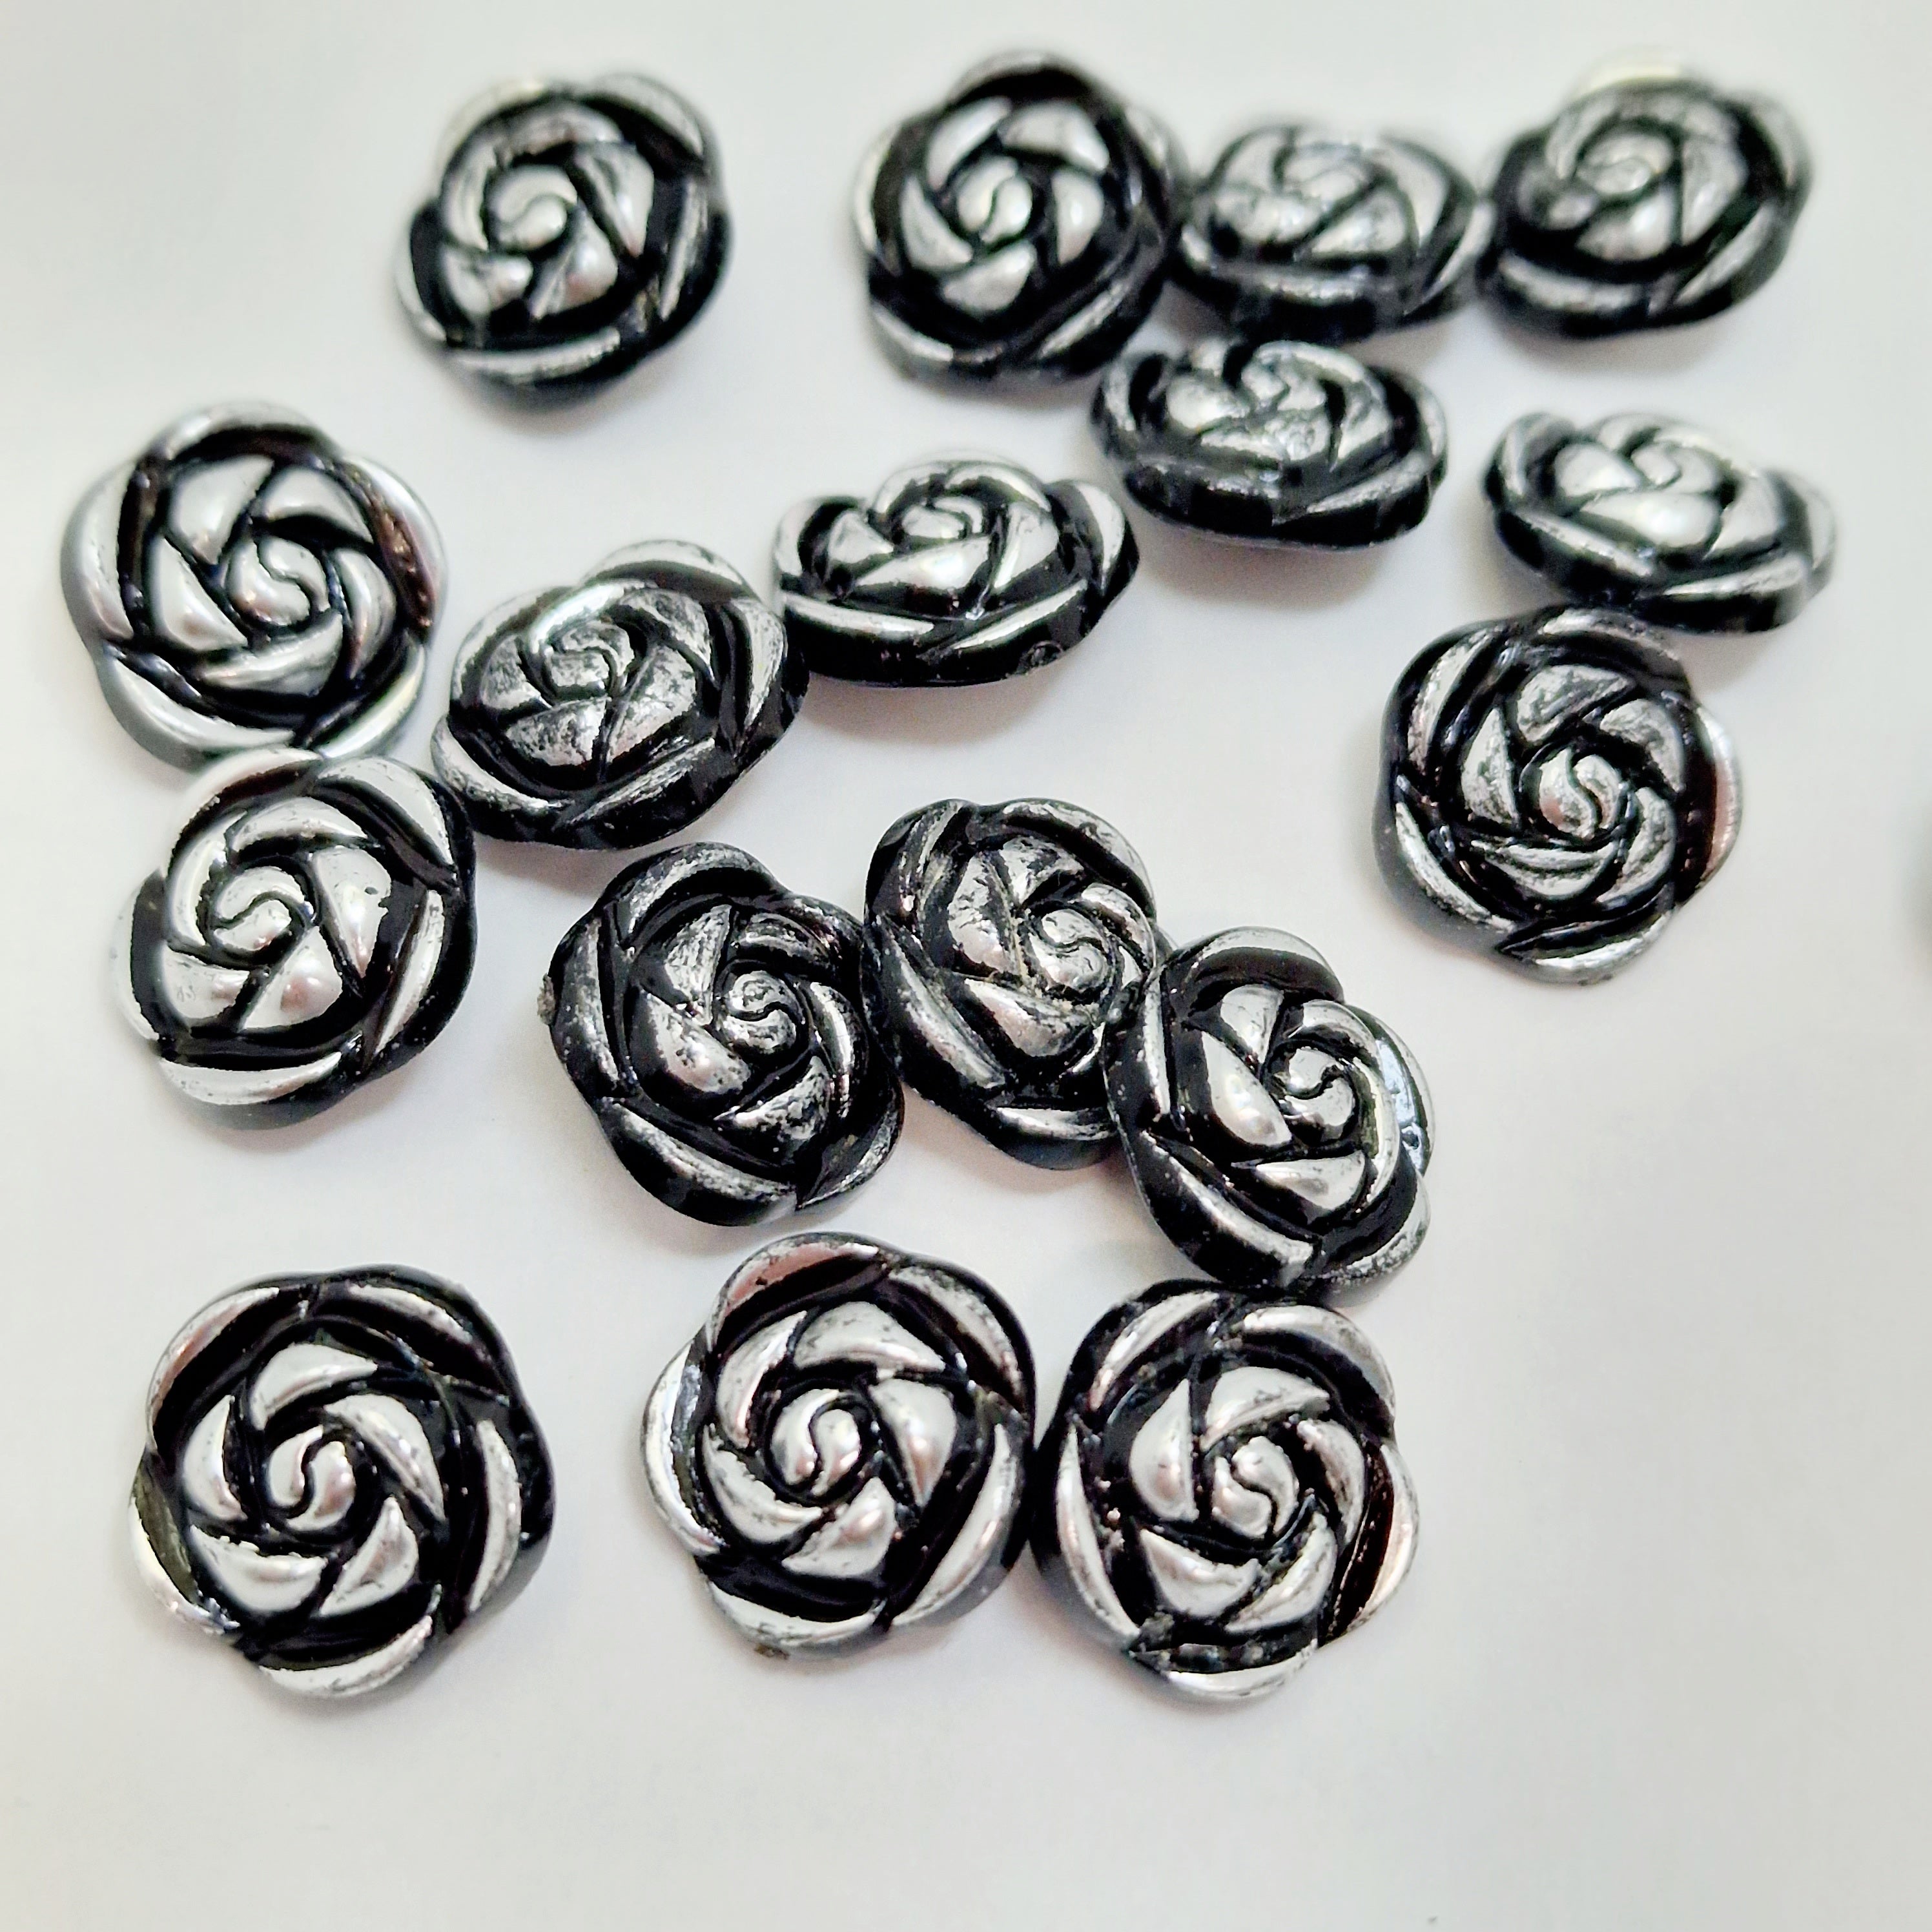 MajorCrafts 40pcs 13mm Black & Silver Rose Flower Shank Resin Buttons